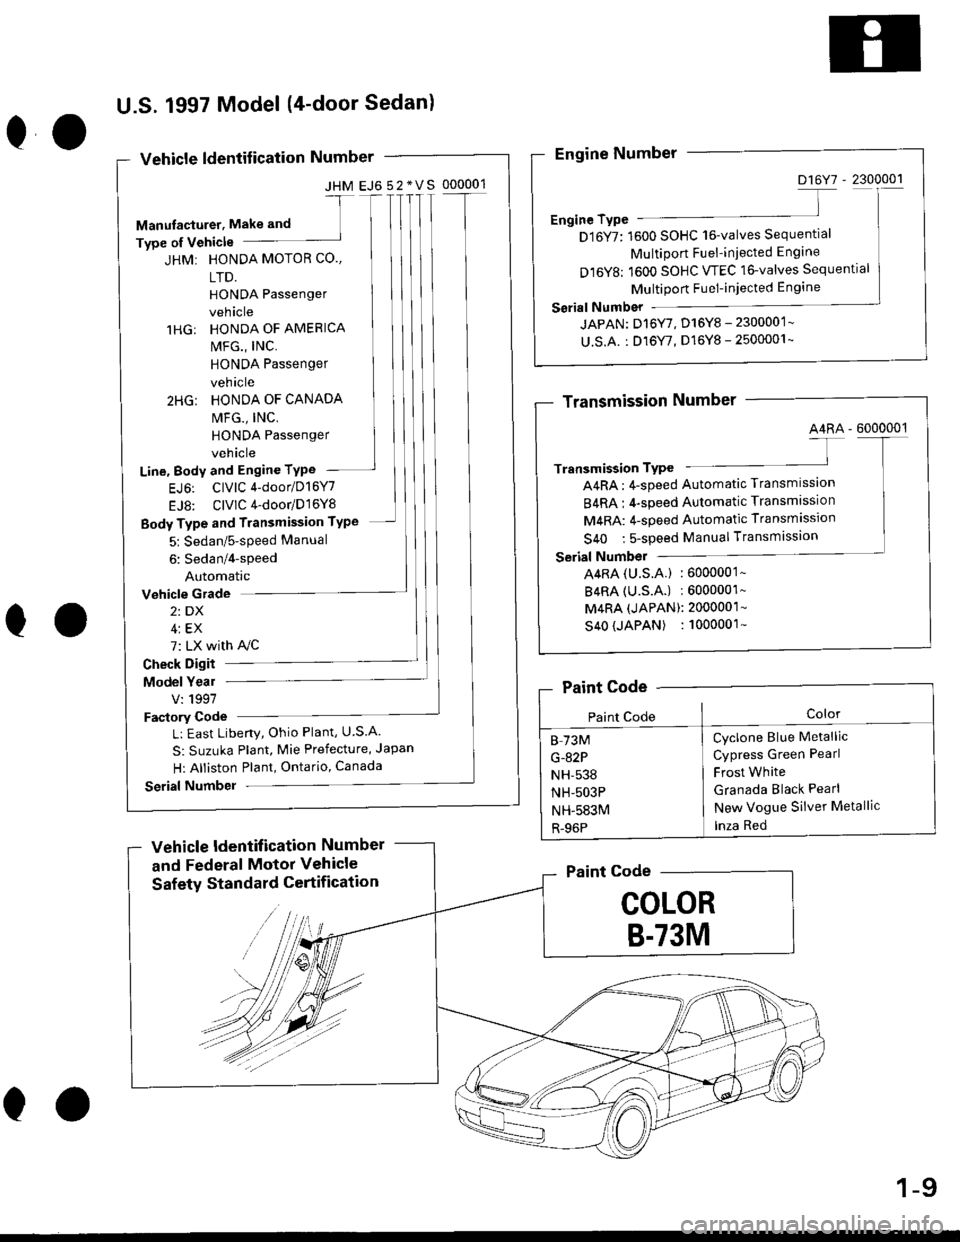 HONDA CIVIC 1999 6.G Workshop Manual 00
U.S. 1997 Model (4-door Sedanl
Vehicle ldentif ication Number
JHM EJ6 52*VS 000001
Manulaqturer. Make and 
-t
Type of Vehicle
HONDA MOTOR CO.,
LTD.
HONDA Passenger
vehicle
HONDA OF AMERICA
MFG., IN